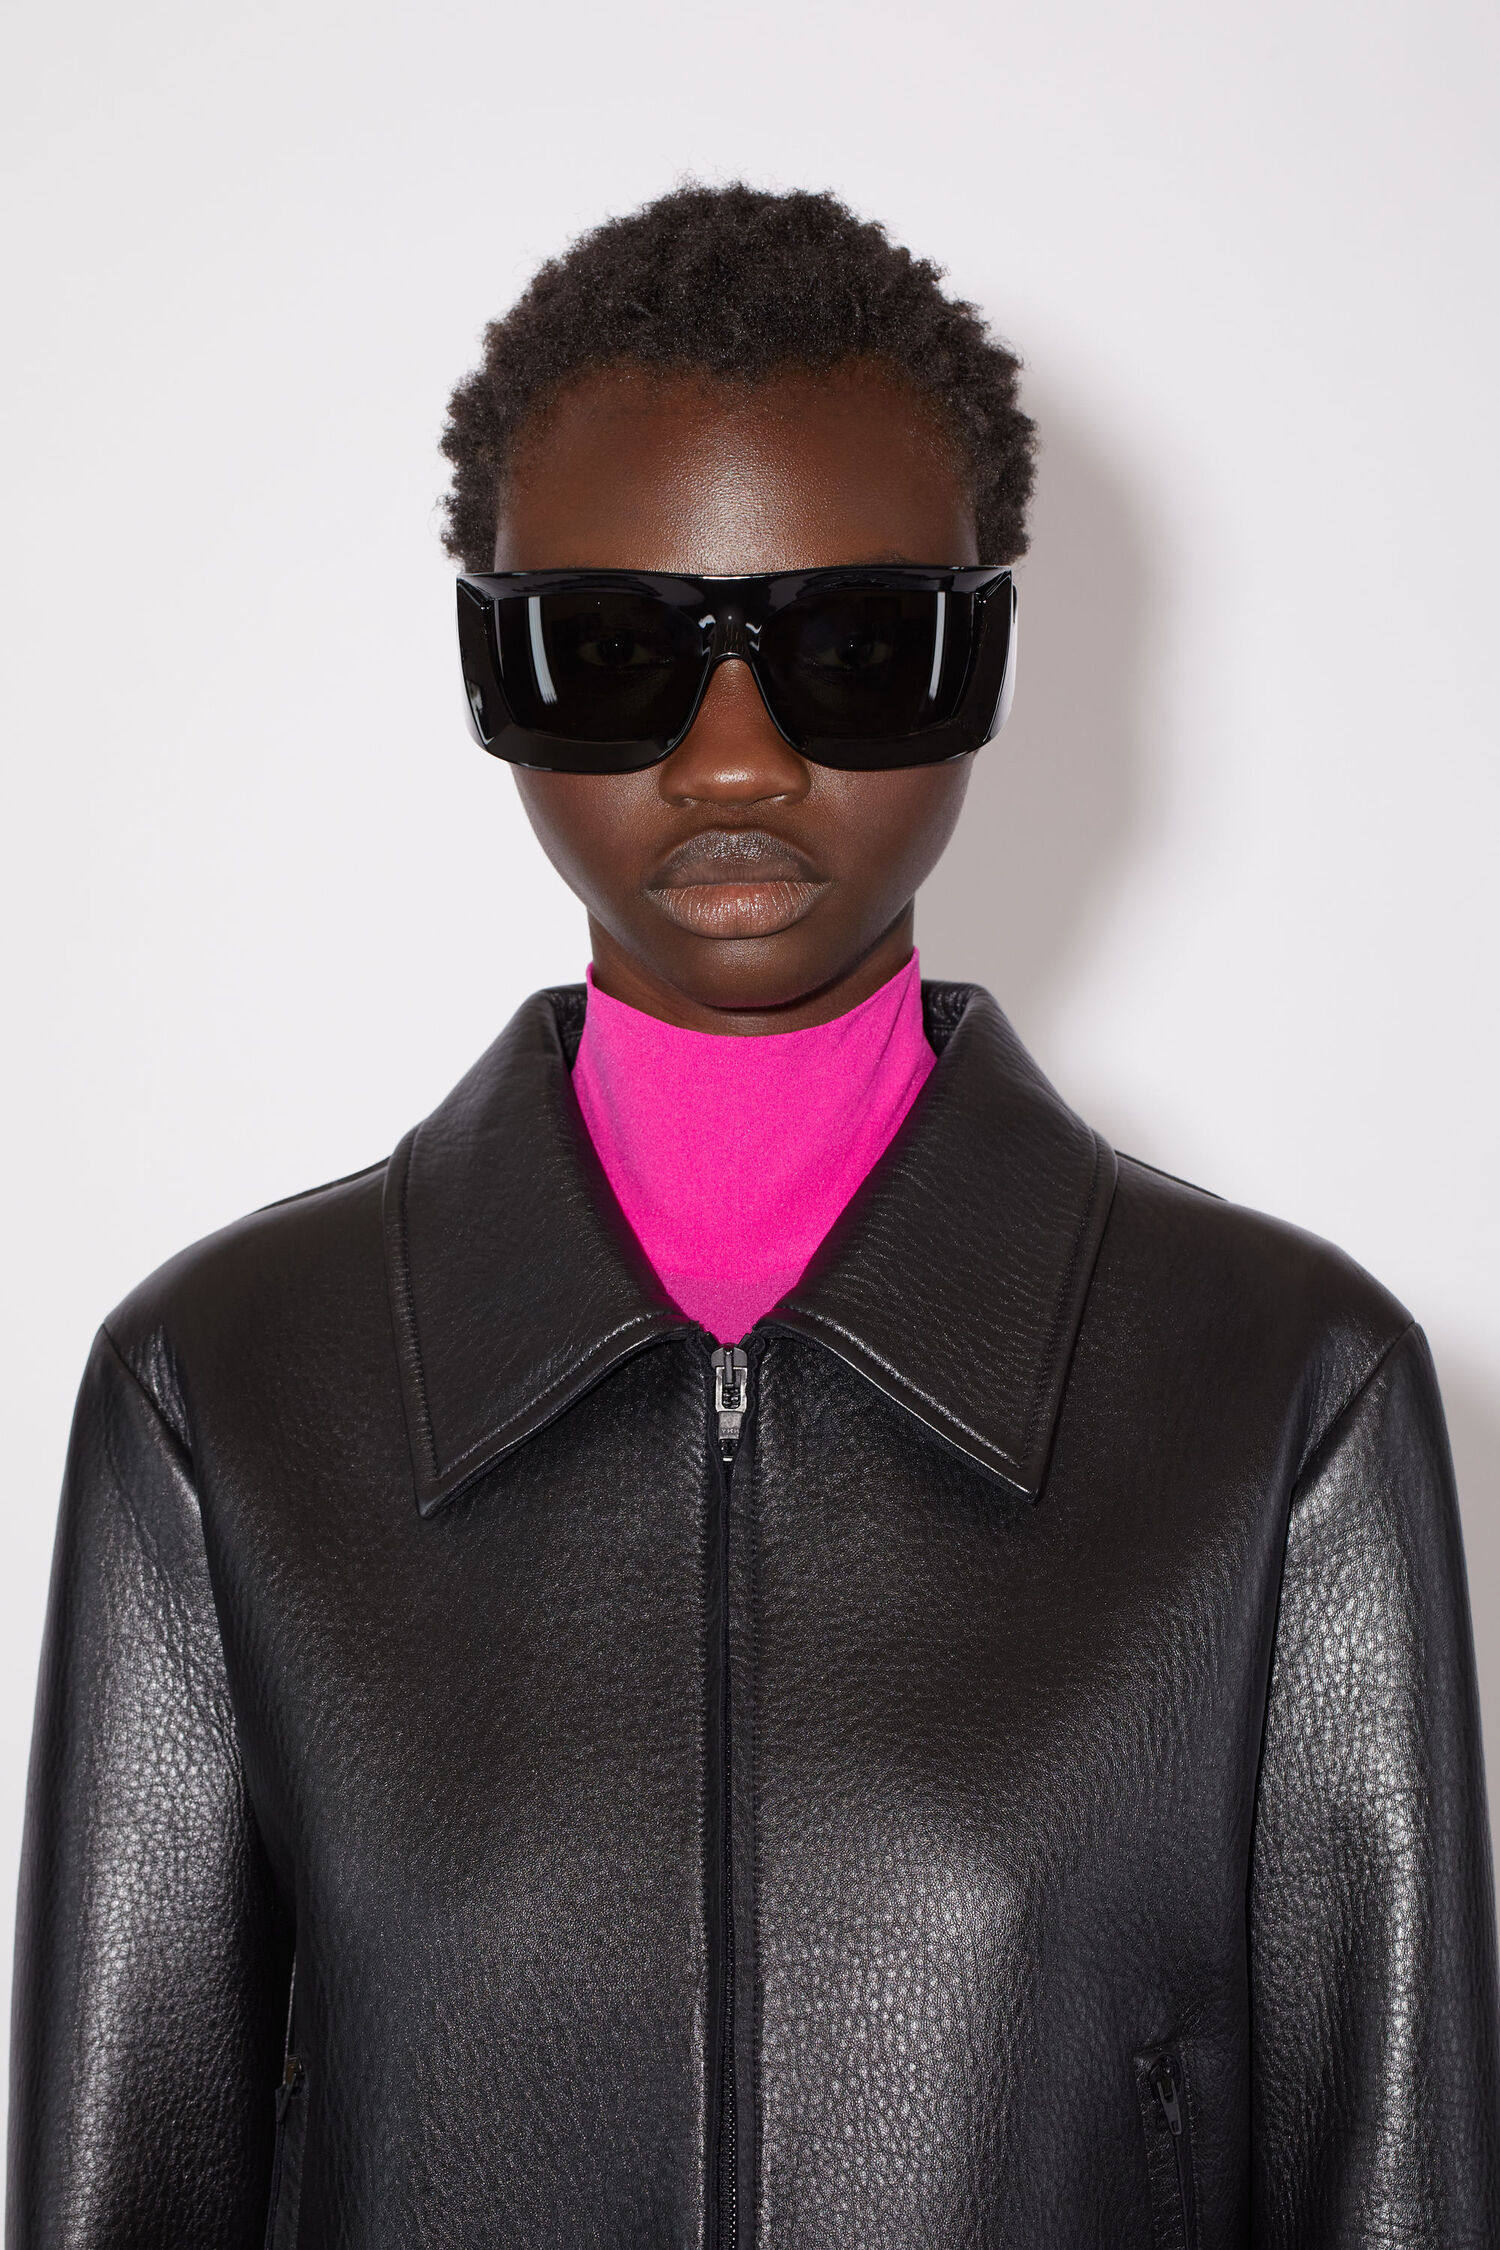 Acne Studios - Leather jacket - Black